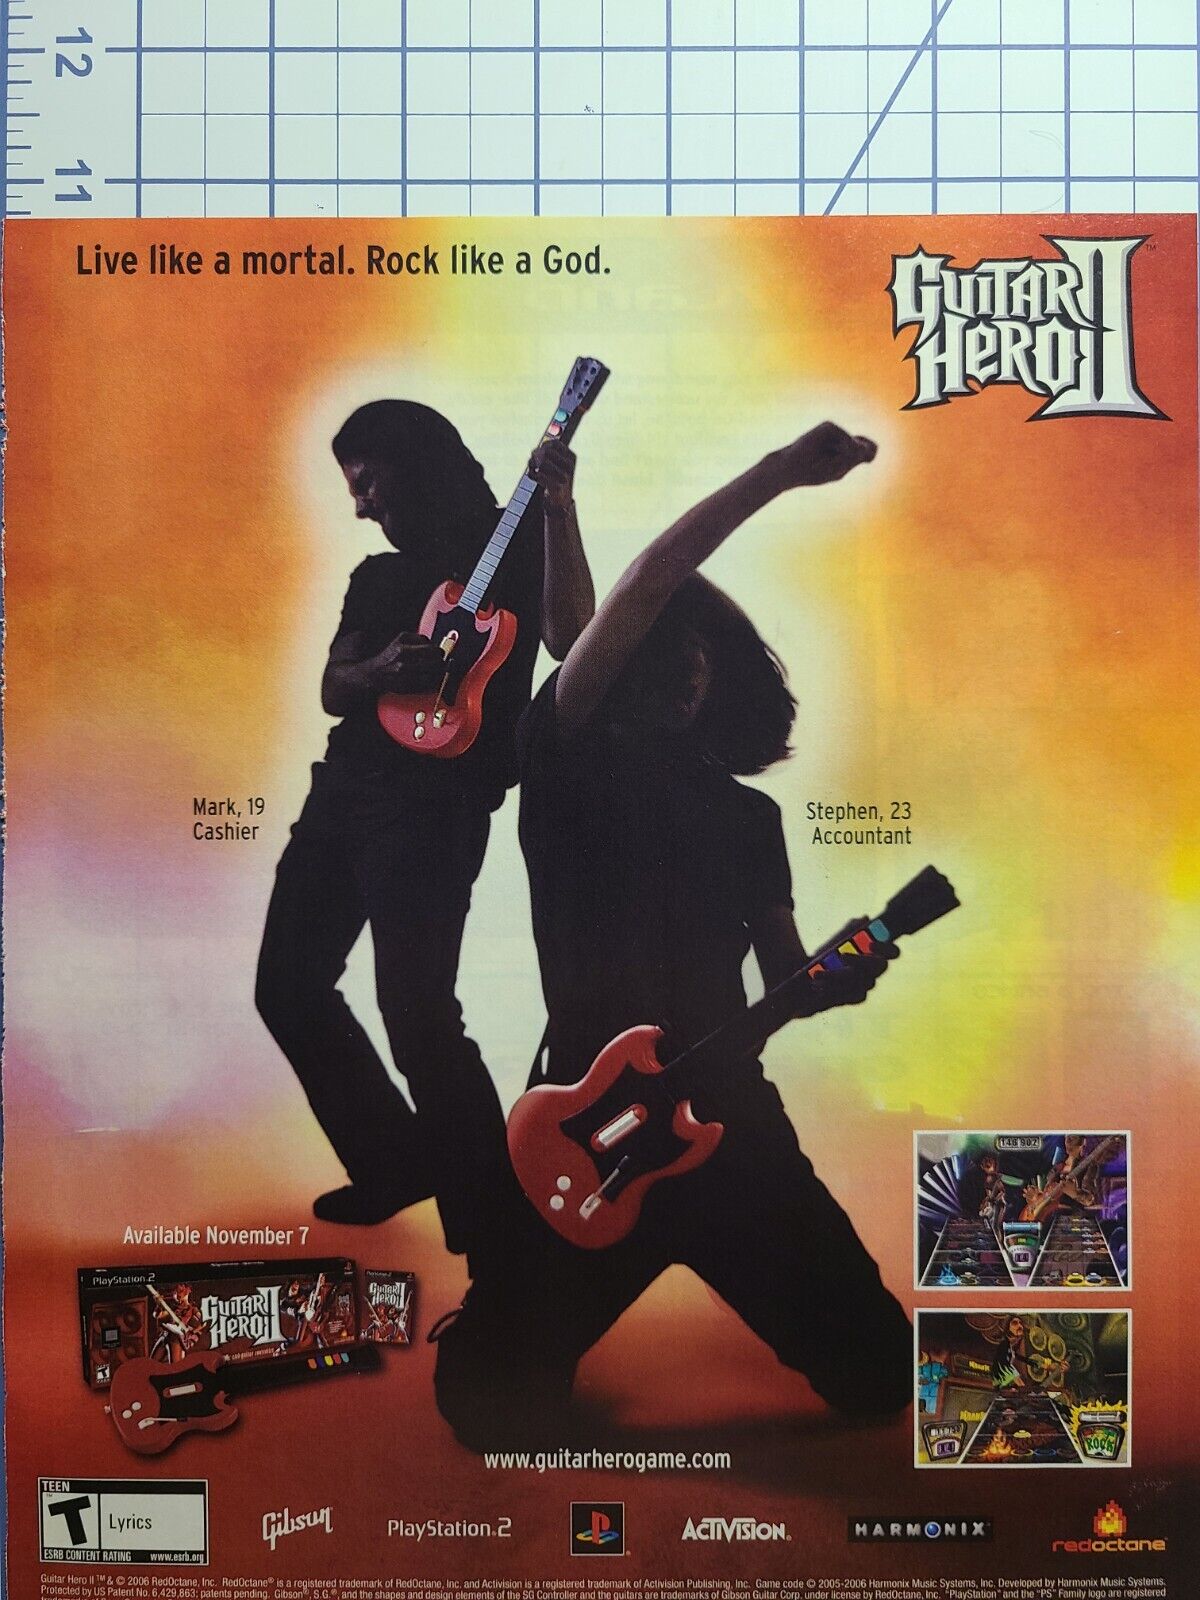 Guitar Hero II RedOctane Activision Playstation 2 Magazine Print Ad 2006